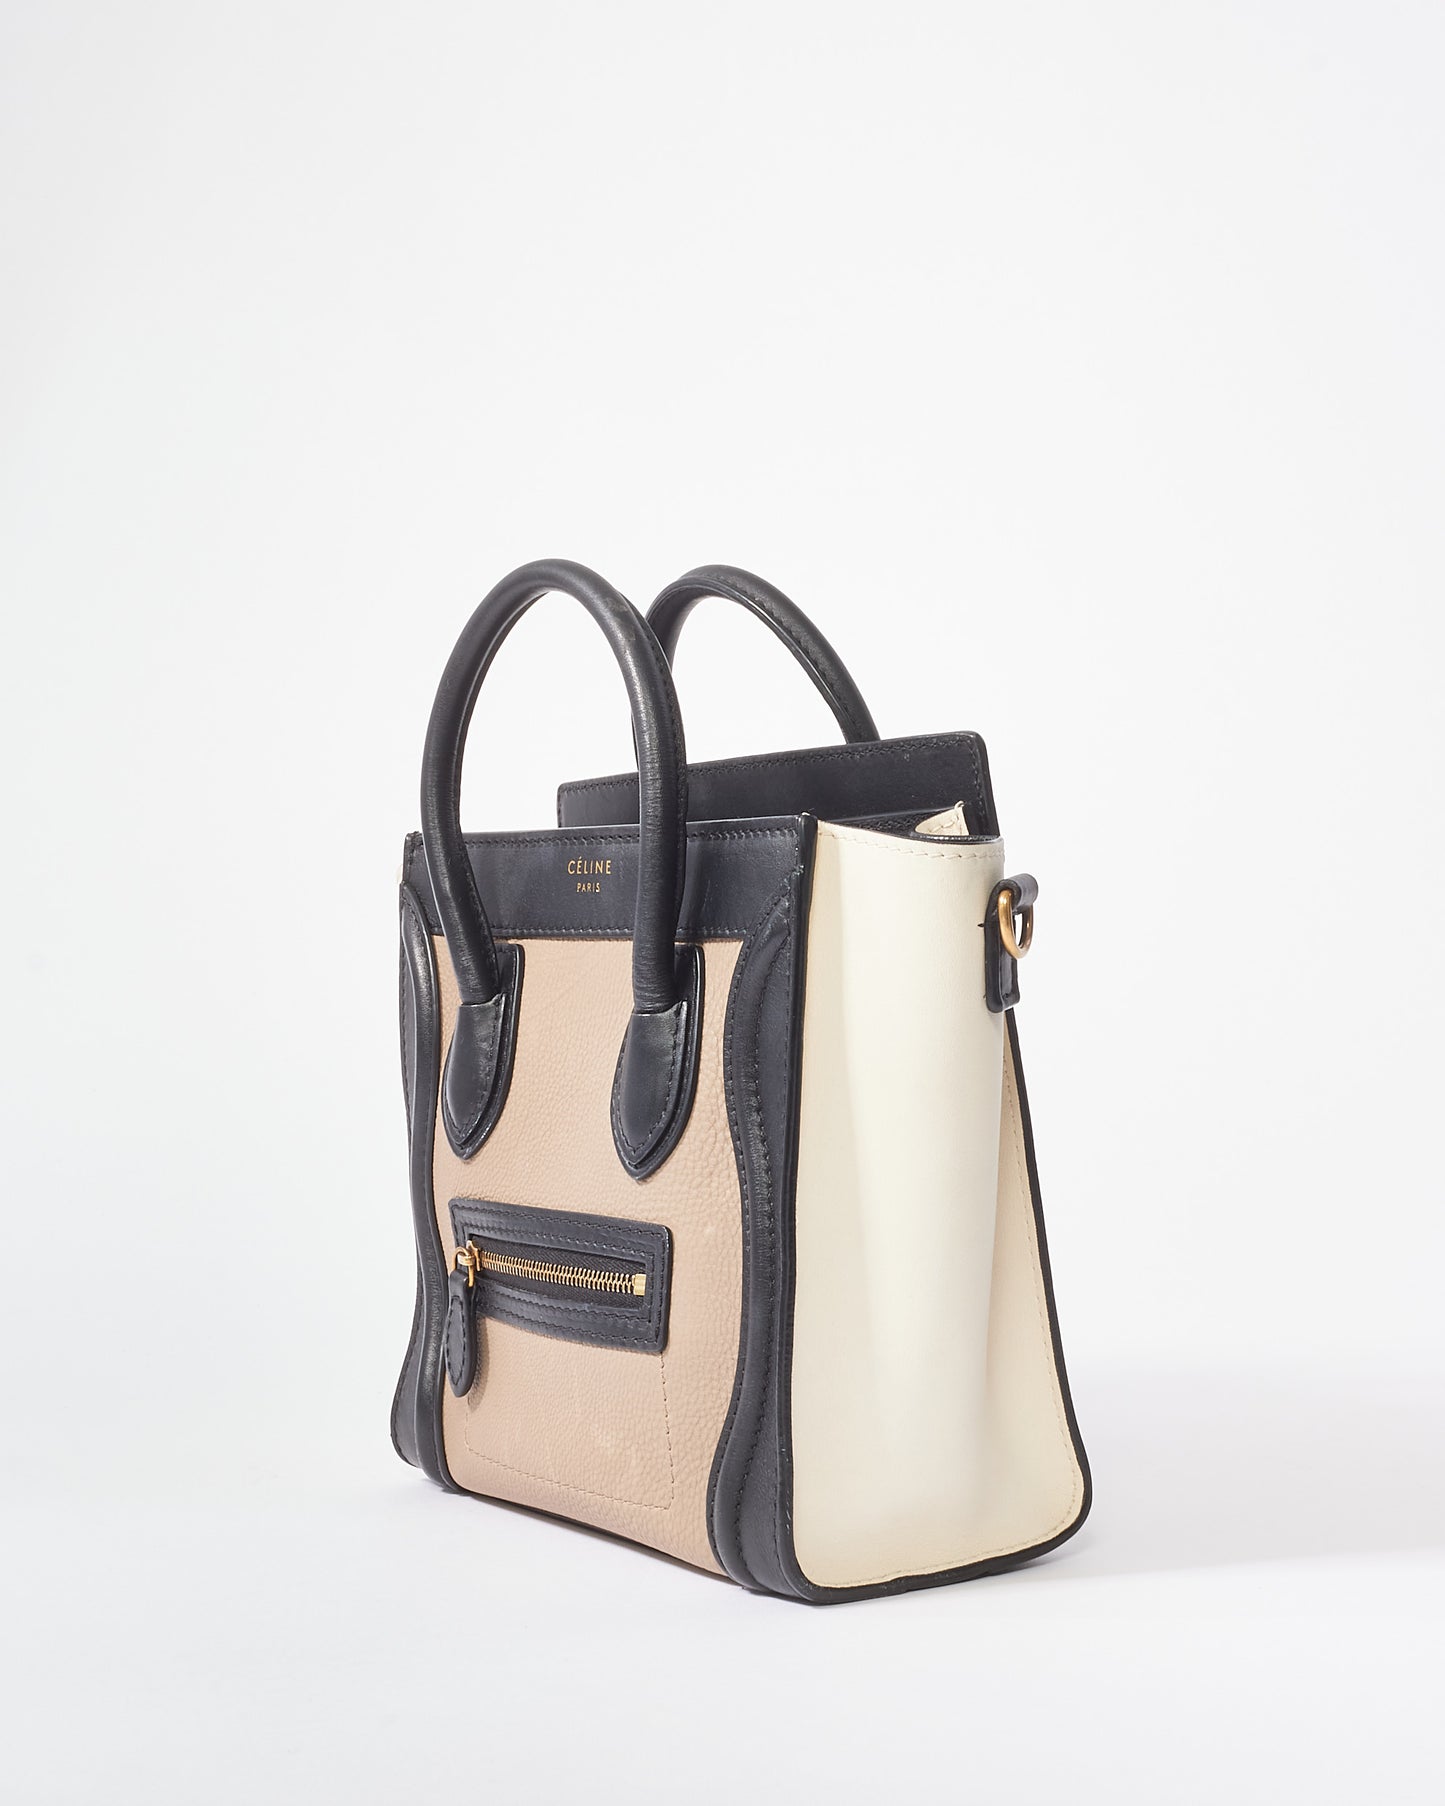 Celine Tri-Color Beige/Black/White Leather Nano Luggage Bag